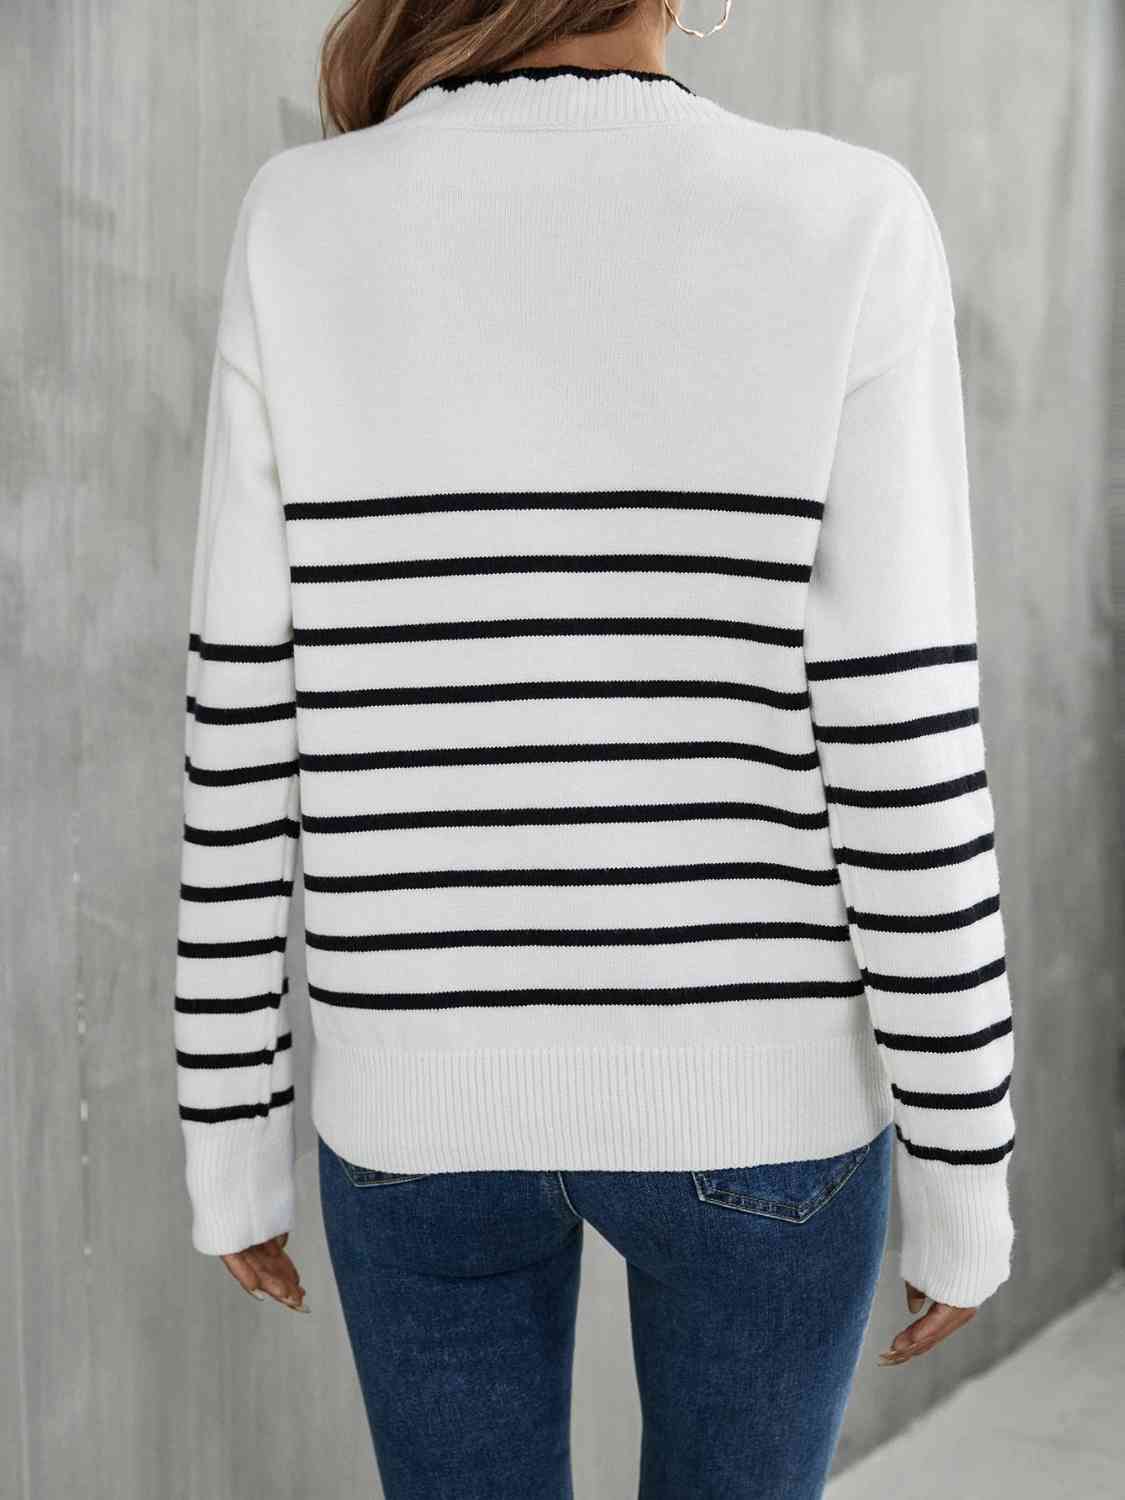 Malorie Striped V-Neck Sweater